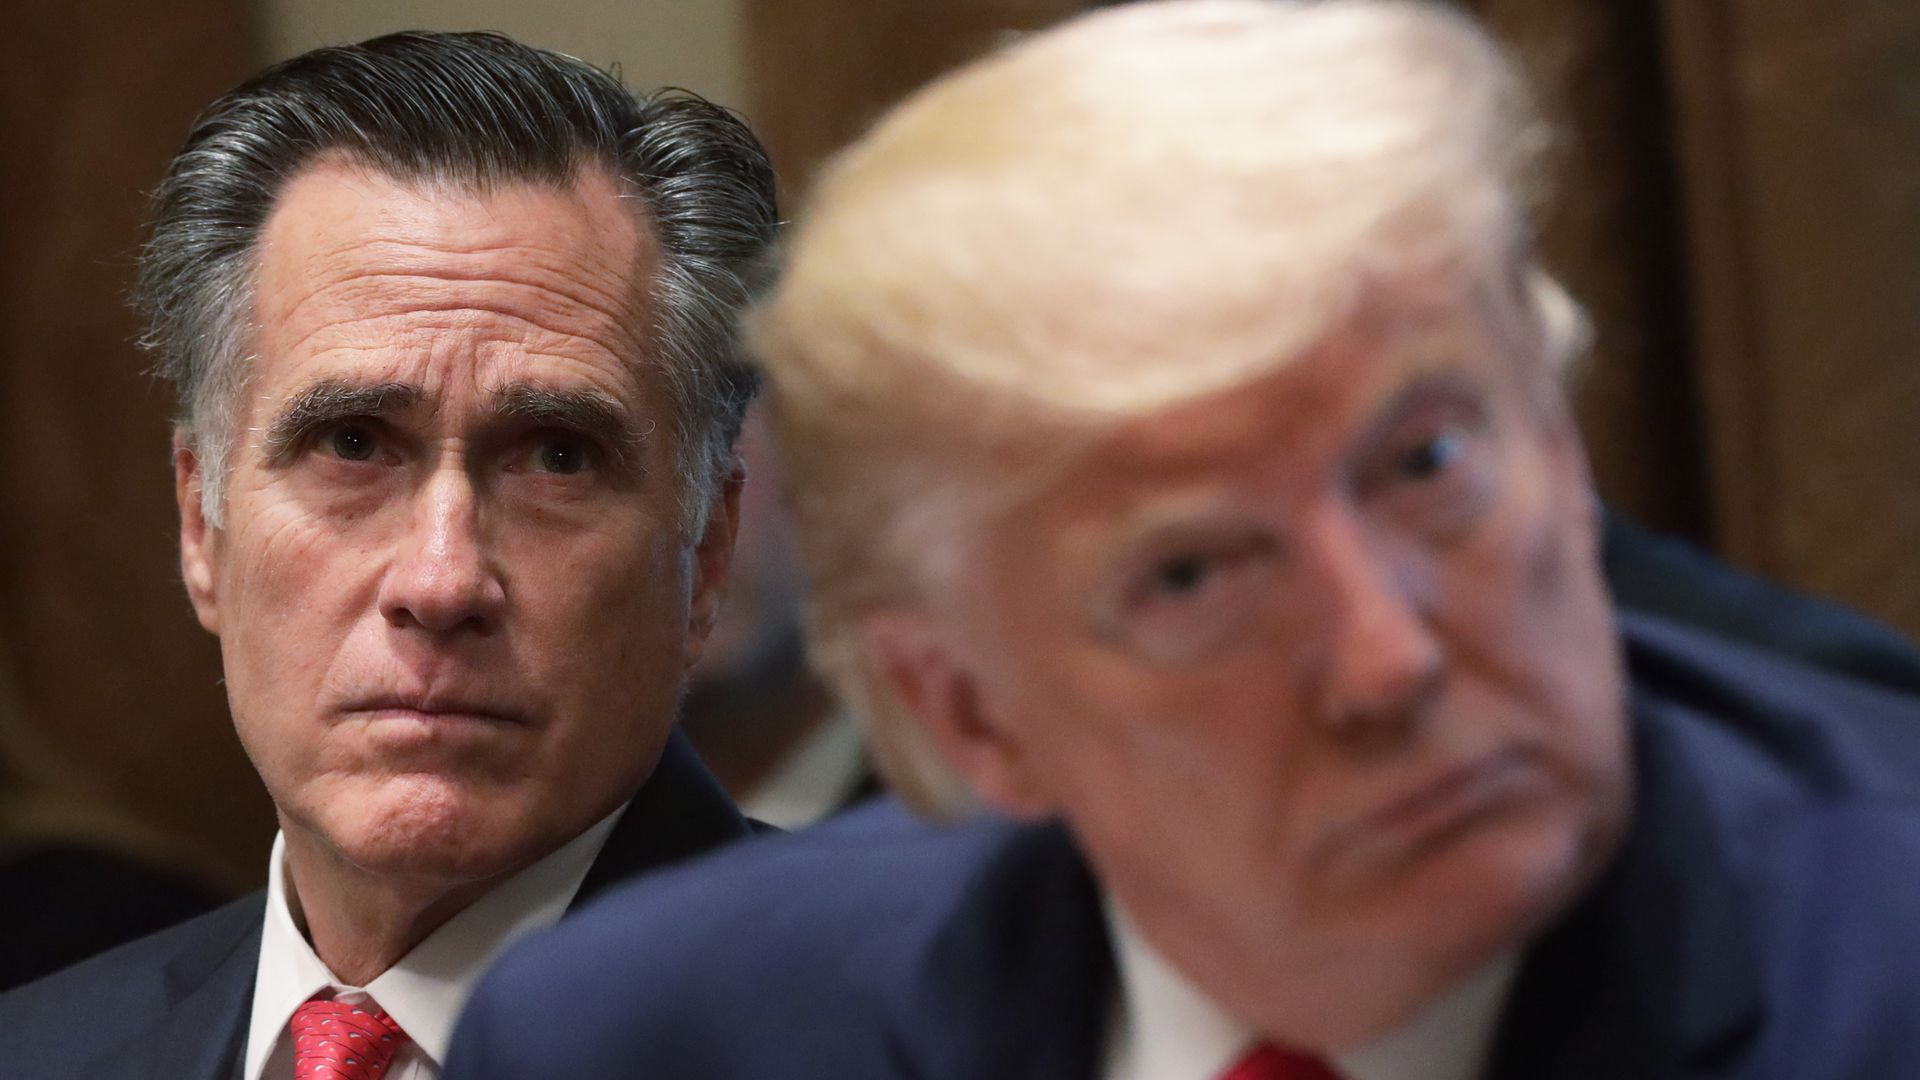 Romney seated next to Trump